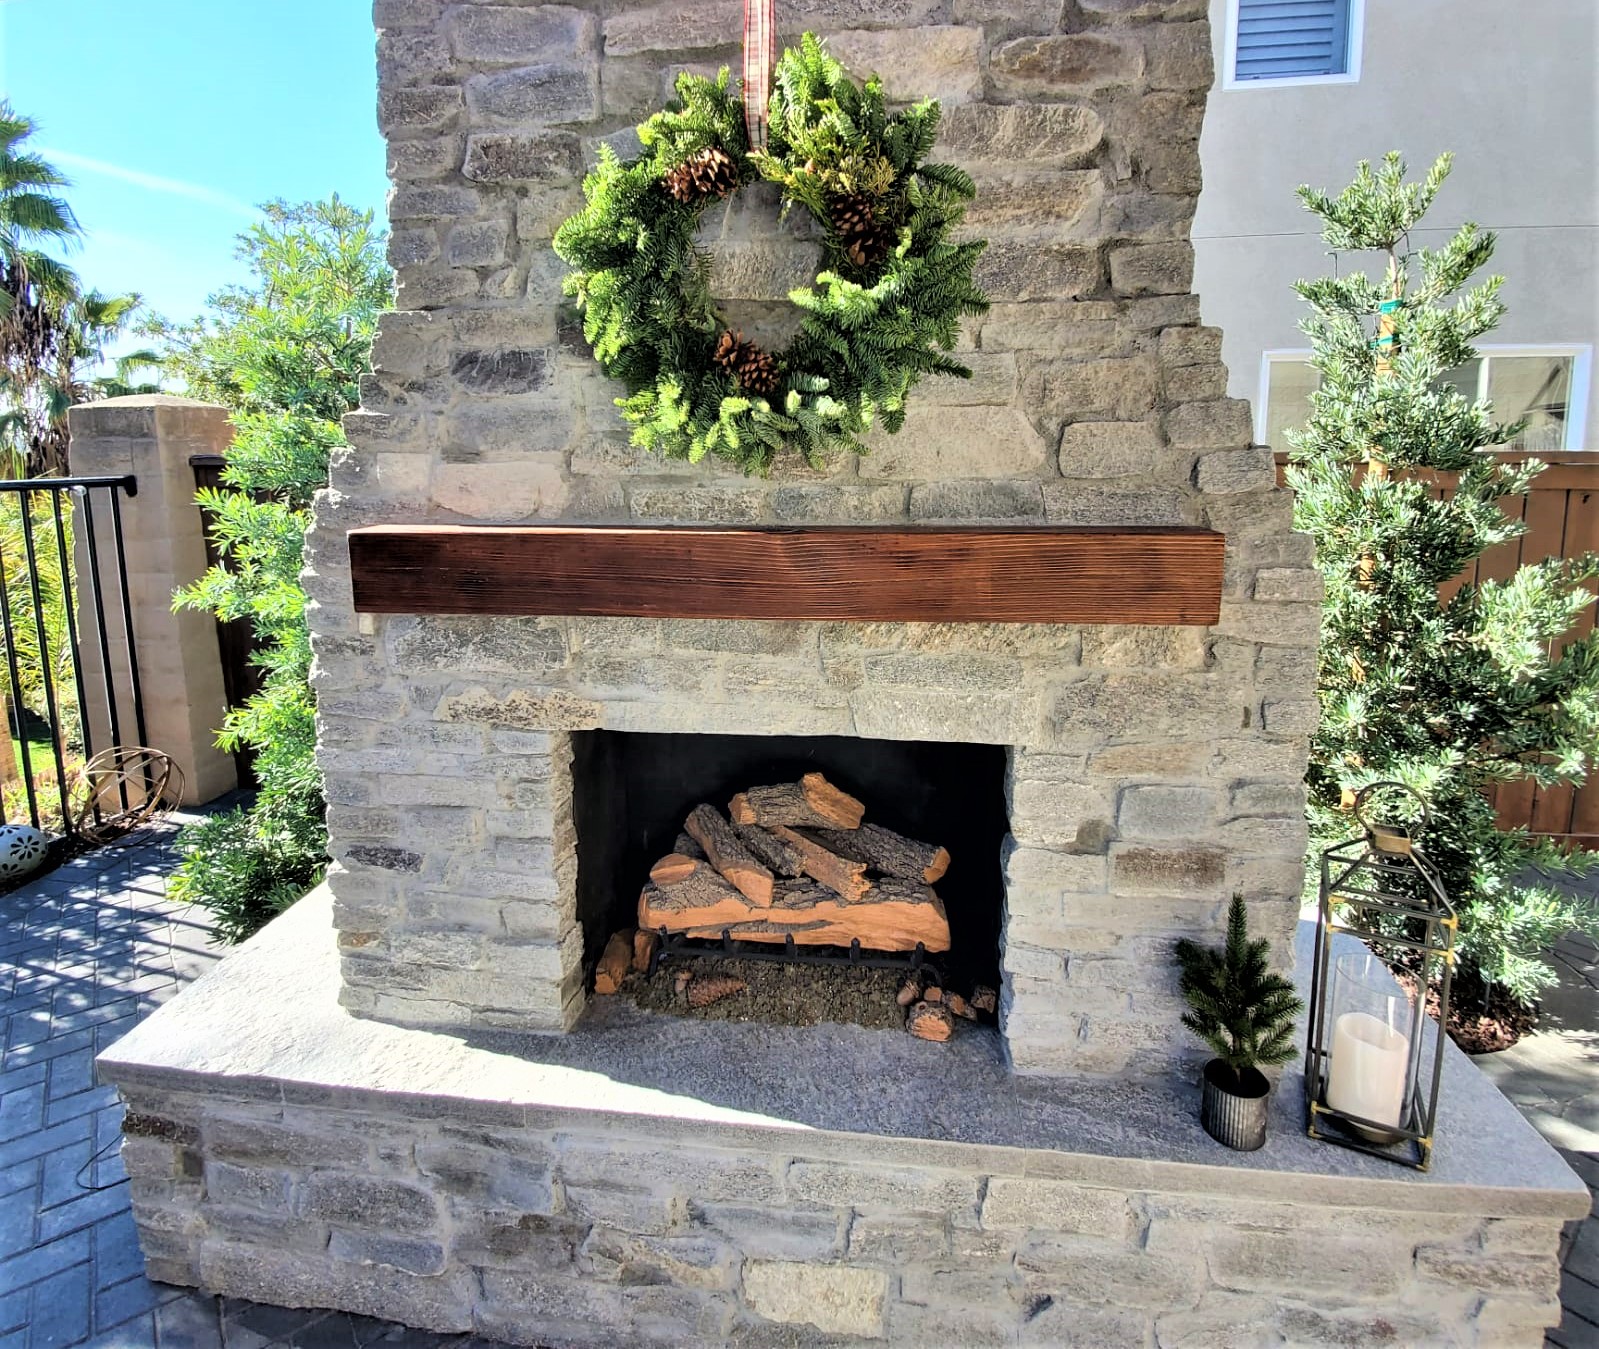 carlsbad san diego custom fireplace outdoors in backyard